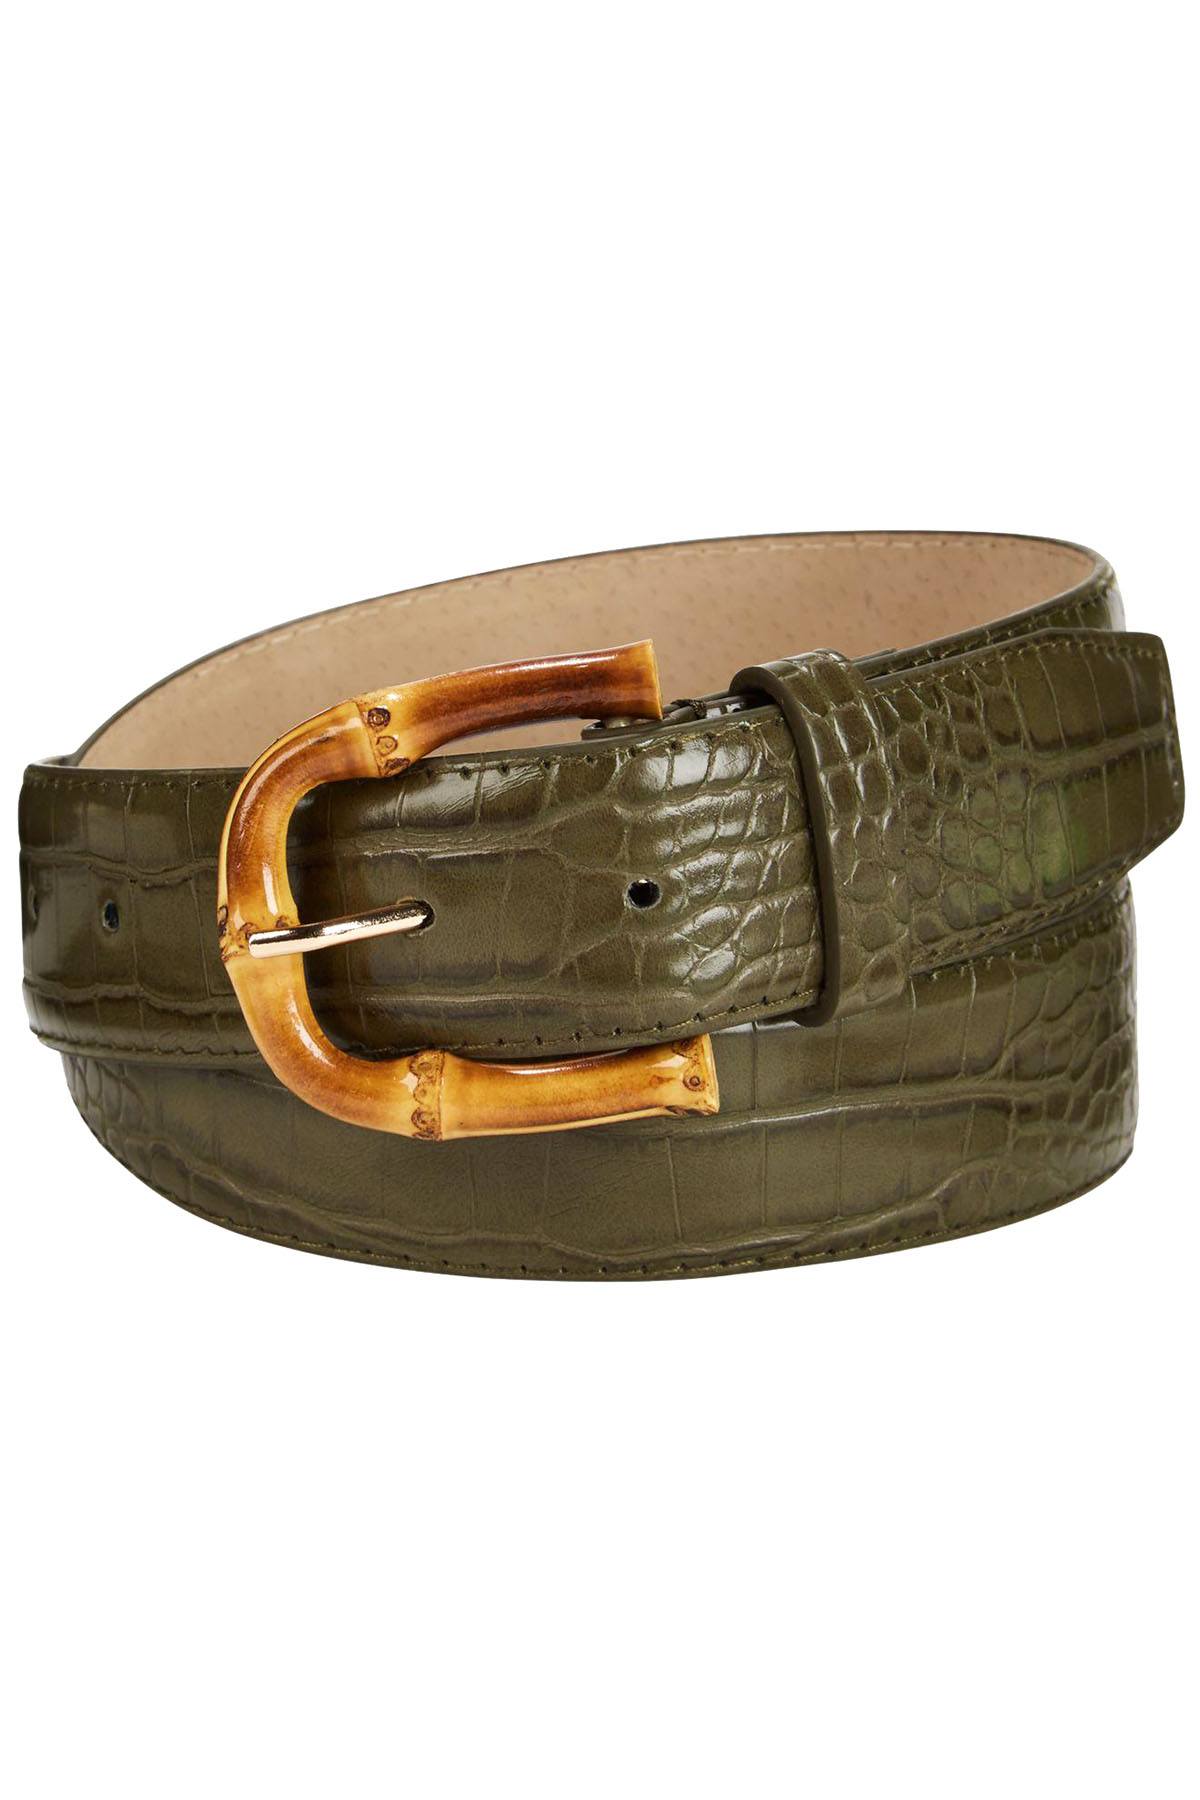 Steve Madden Green Croc-Embossed Faux Leather Belt